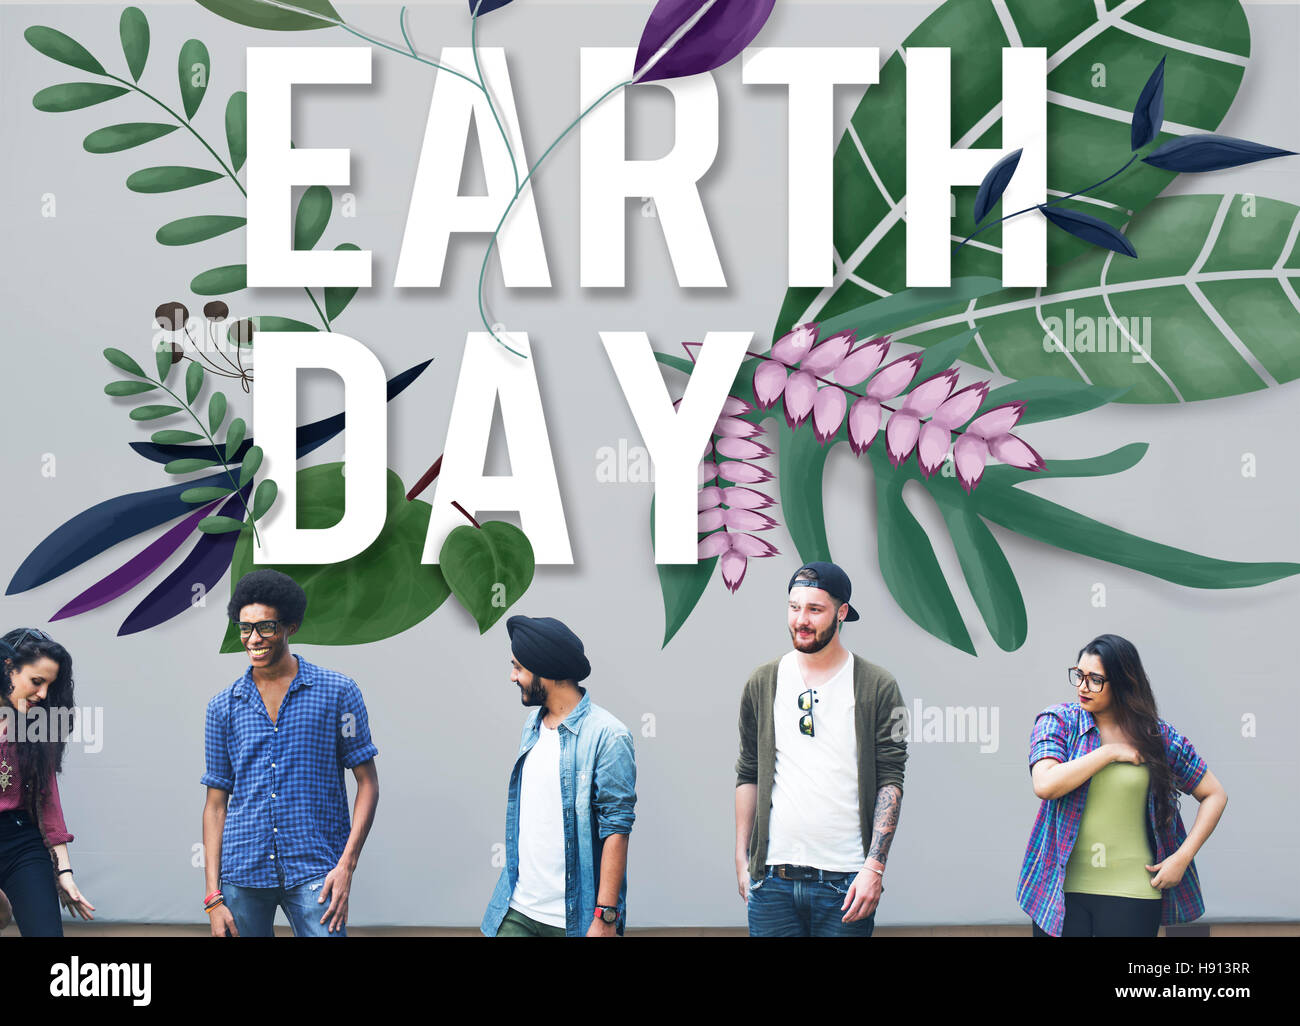 Eco Friendly Earth Day Green Environment Concept Stock Photo